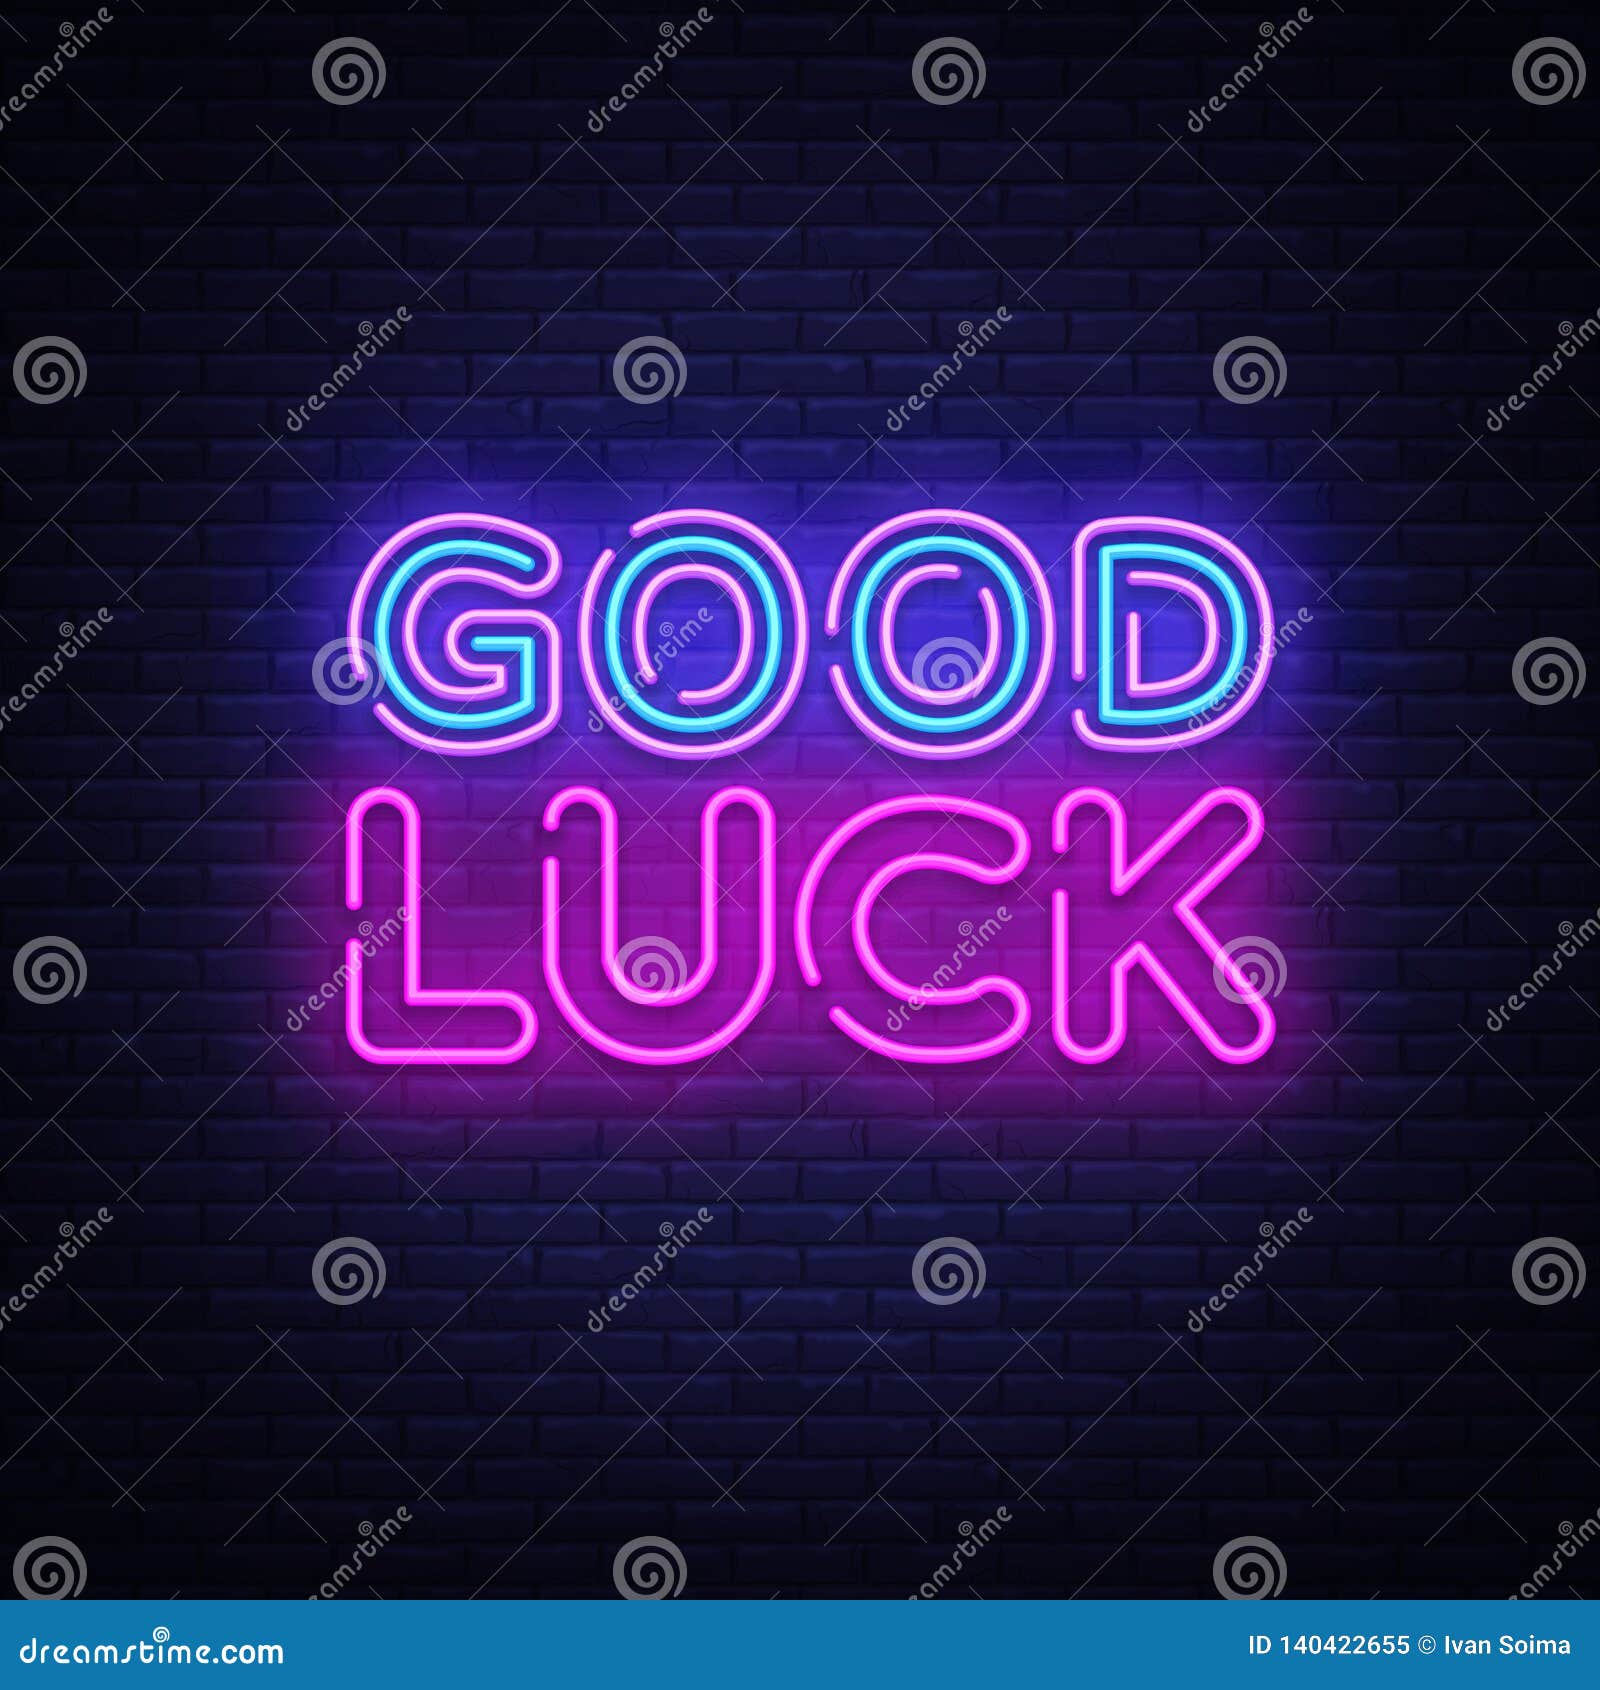 Good Luck Neon Sign Vector. Good Luck Design Template Neon Sign Pertaining To Good Luck Banner Template